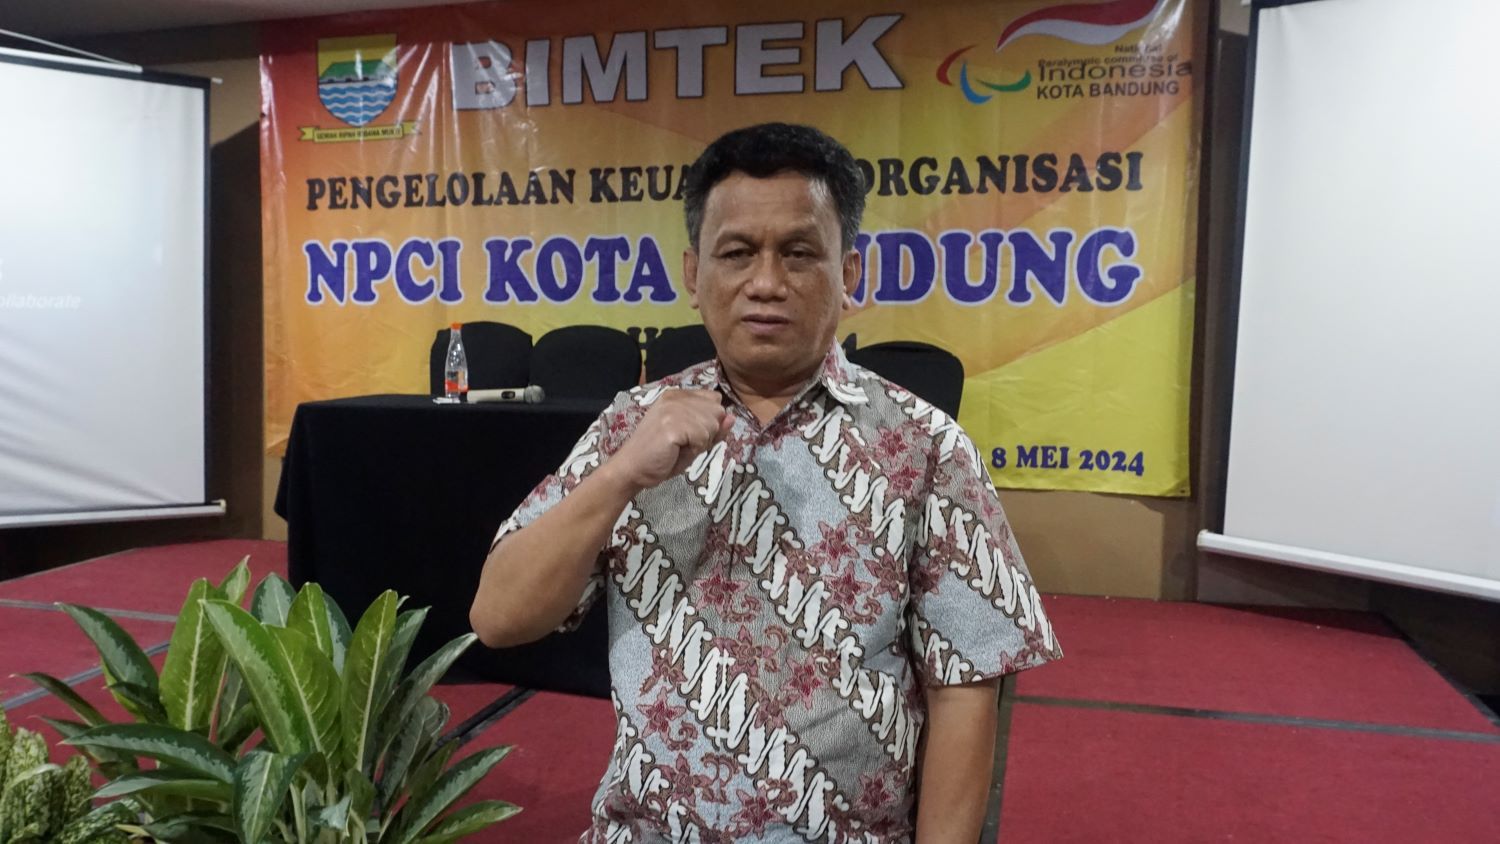 Ketua NPCI Kota Bandung Yadi Sofyan